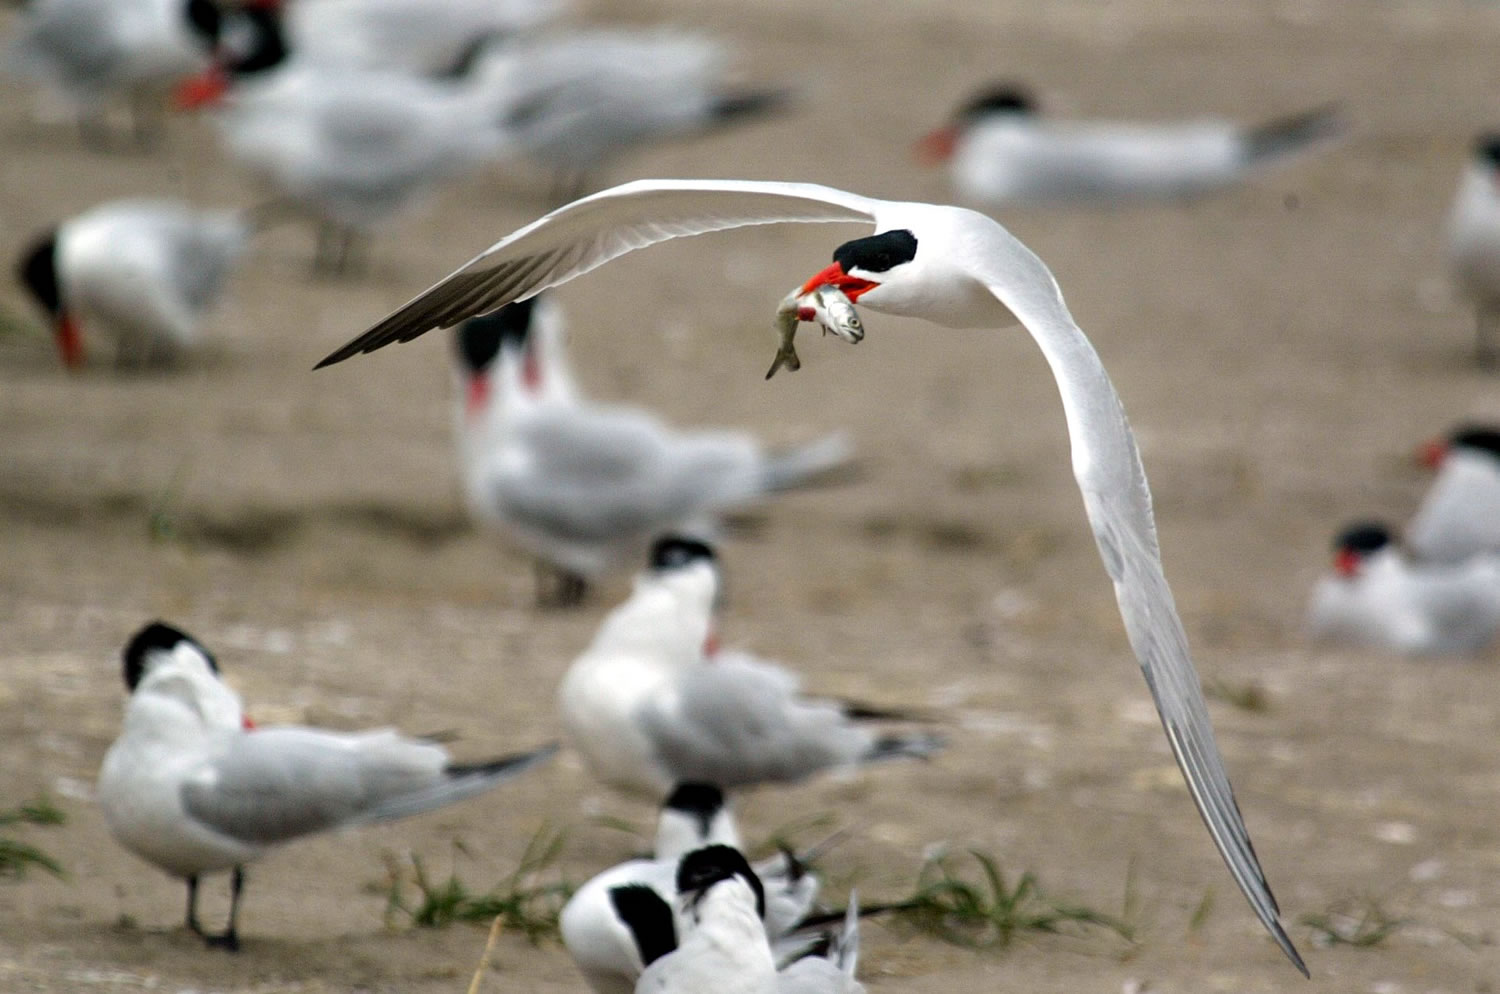 Caspian terns are plentiful in the Columbia River estuary.